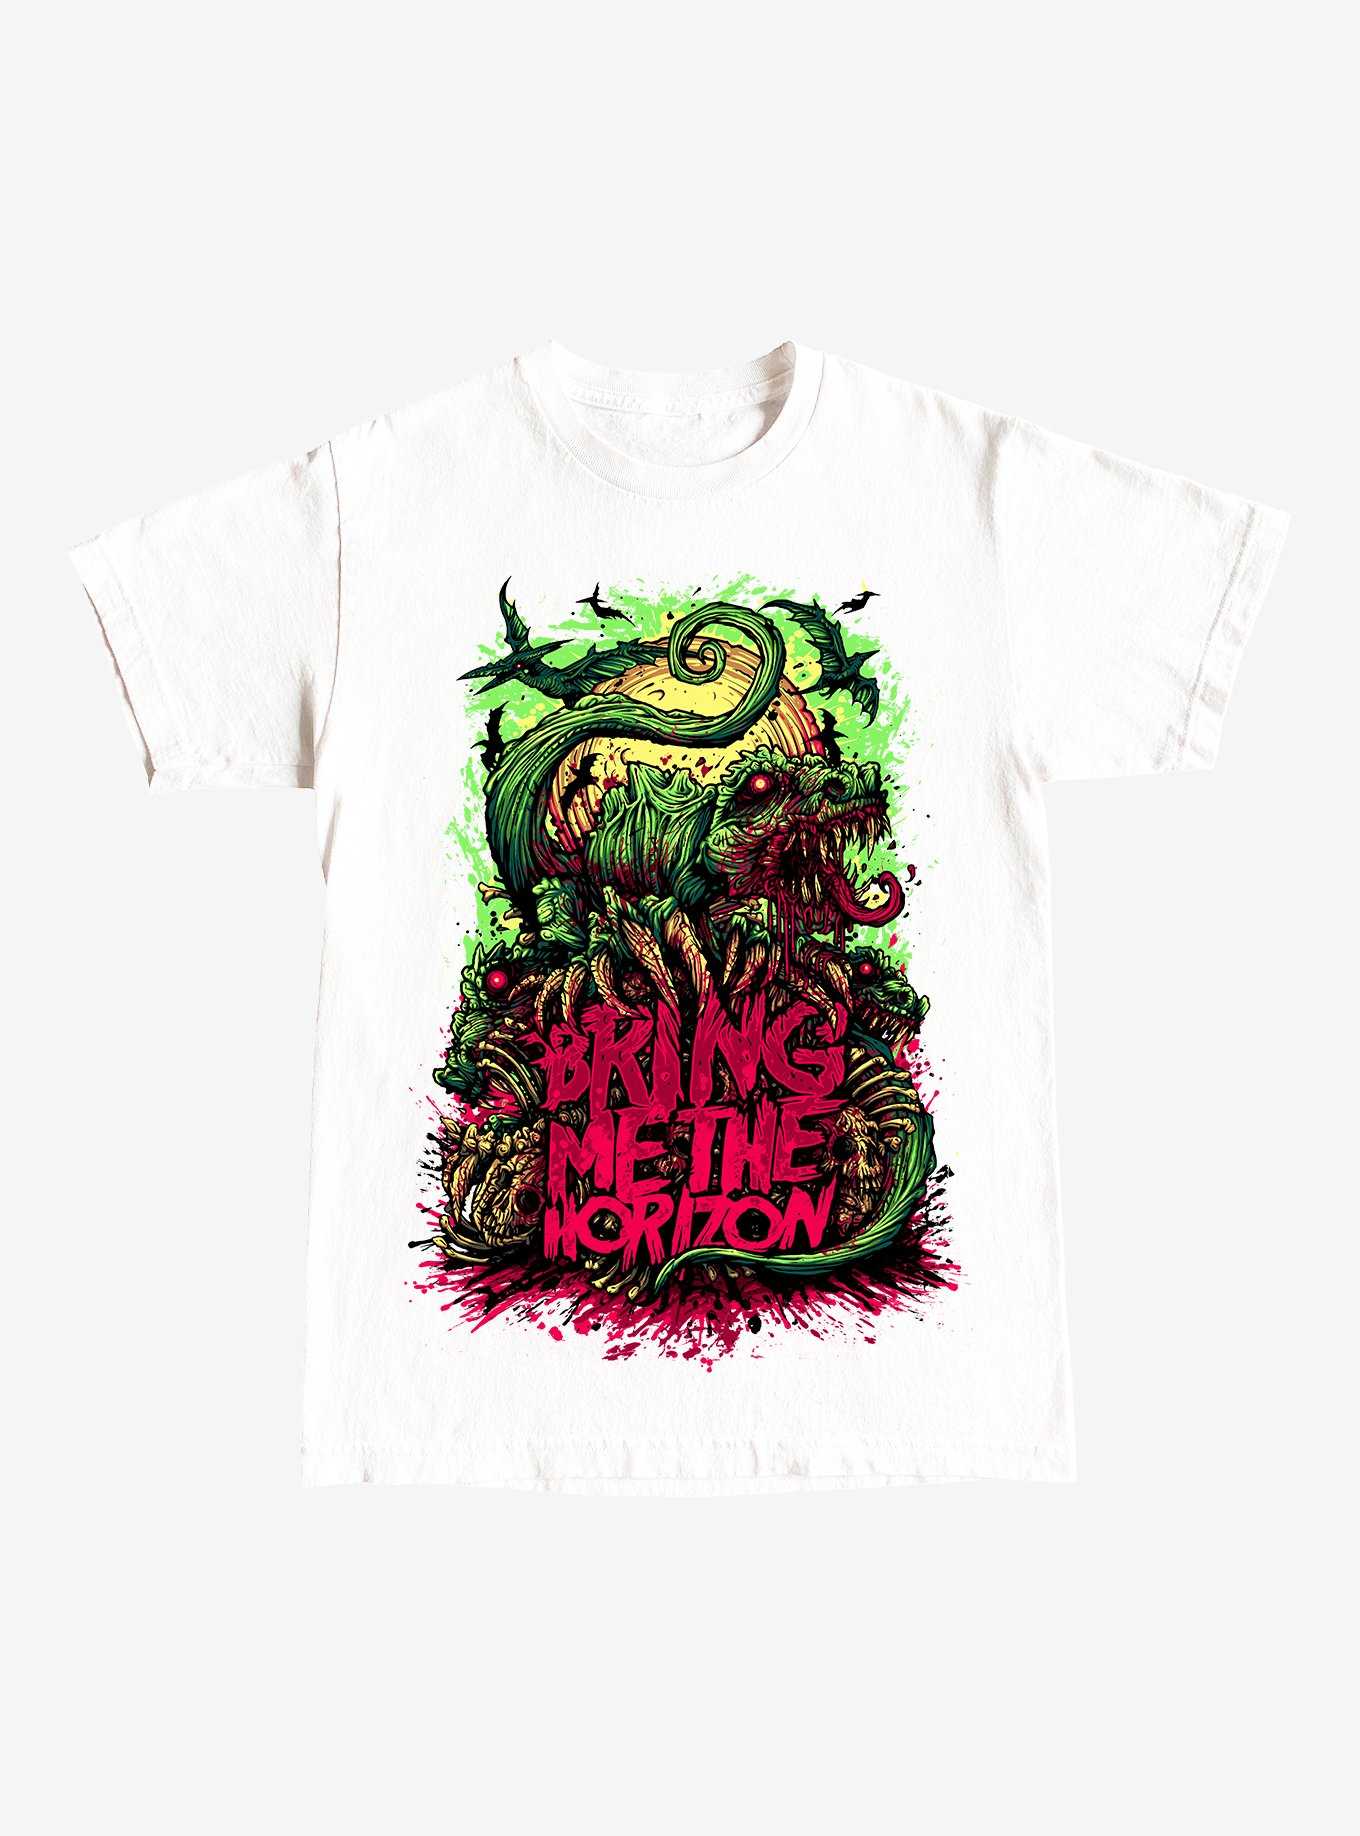 The Beast Over The Garden Wall shirt - Online Shoping